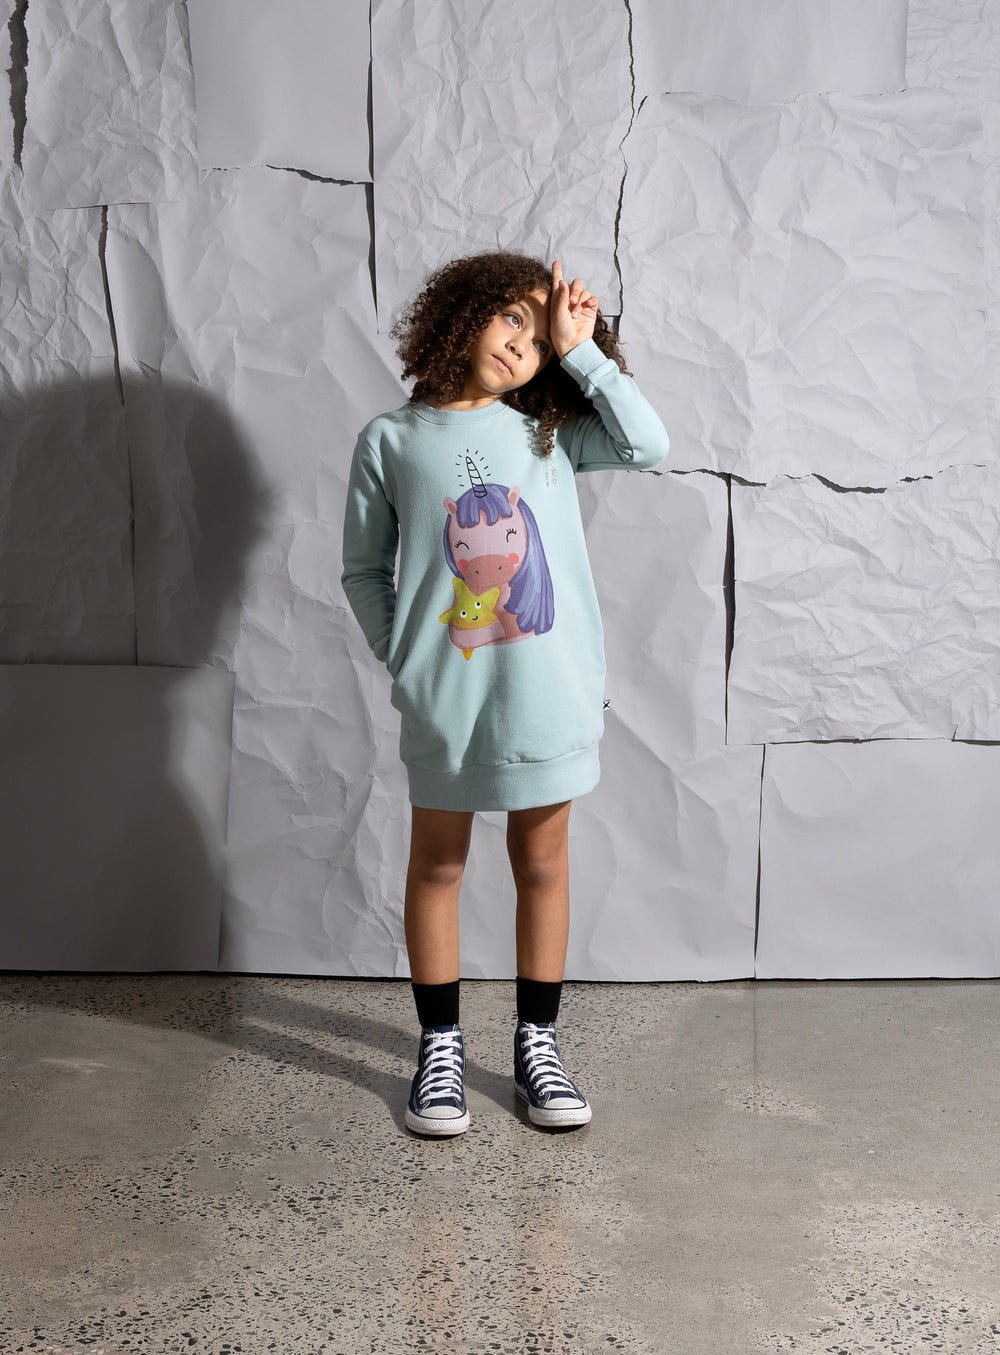 Minti - Sketched Pineapple Dress – Fox in Sox Kids